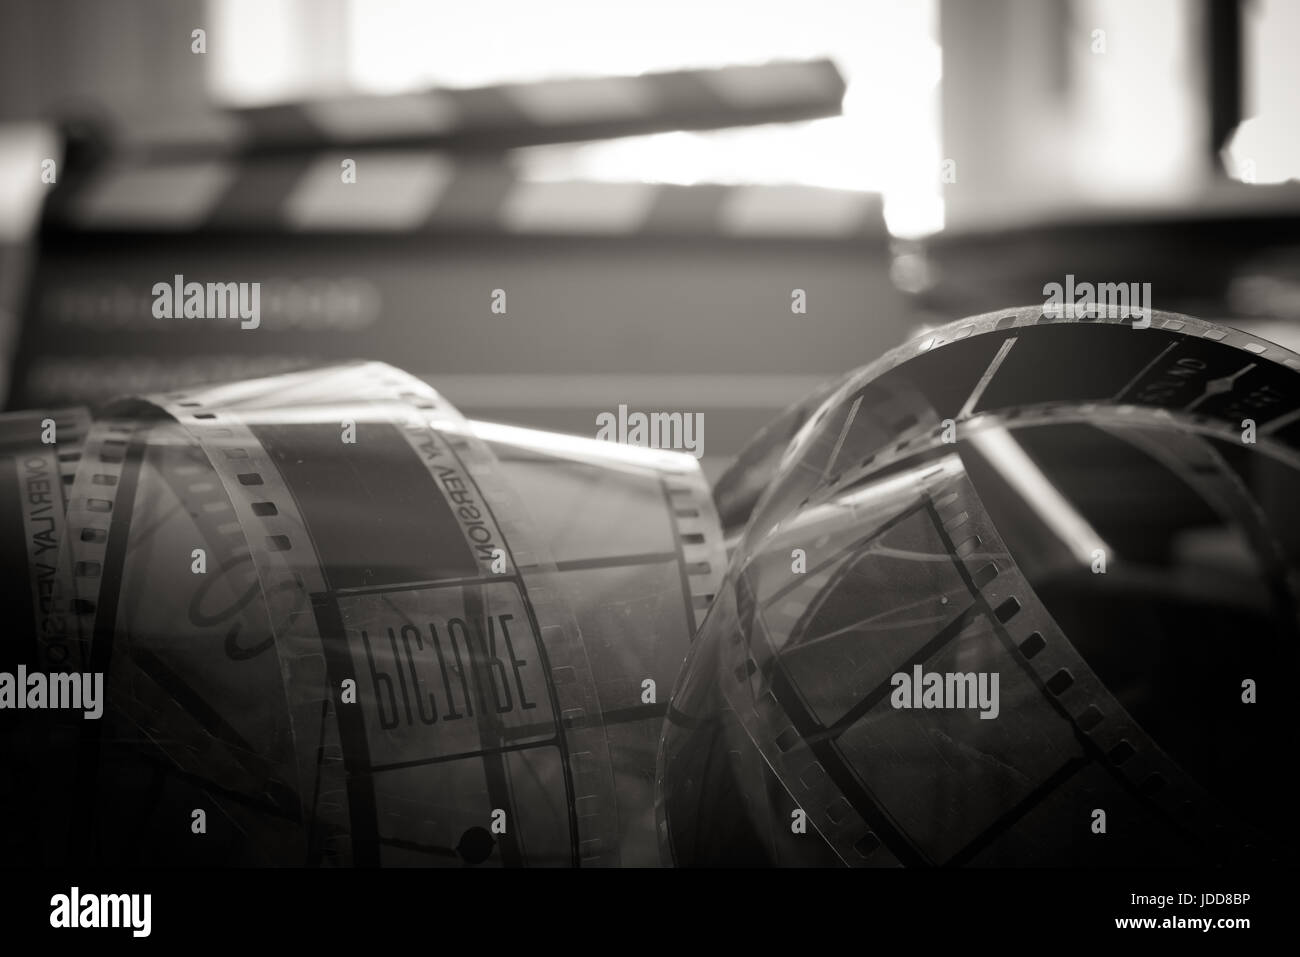 Aged vintage 35 mm film reel, old movie symbol, header filmstrip unrolled close up black and white, defocused clapper board in background Stock Photo